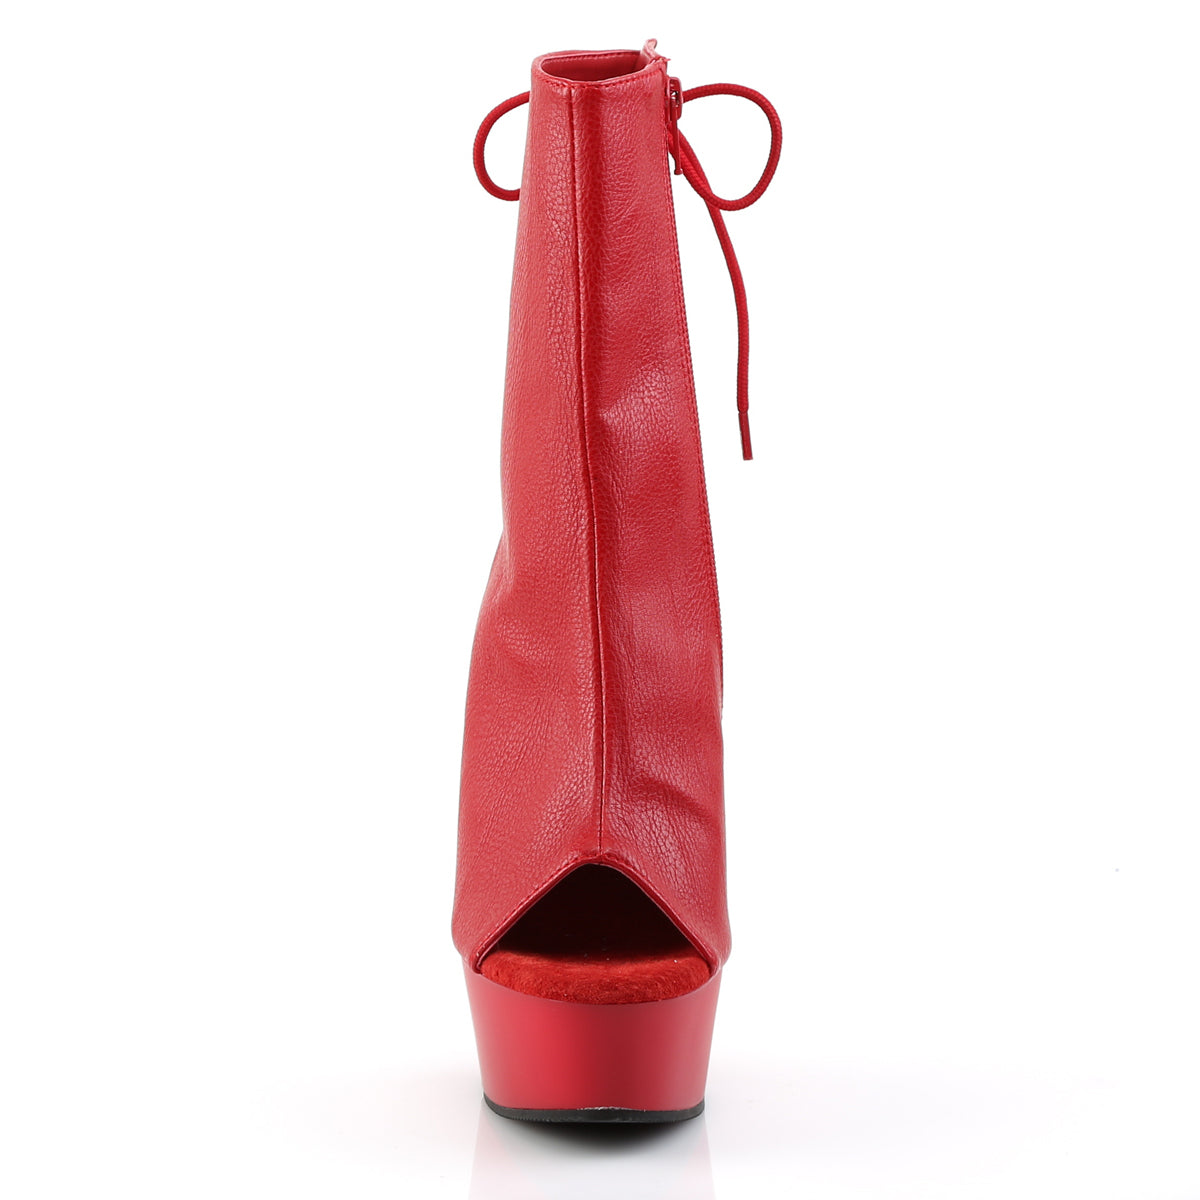 DELIGHT-1018 Pleaser 6 Inch Heel Red Pole Dancing Platforms-Pleaser- Sexy Shoes Alternative Footwear